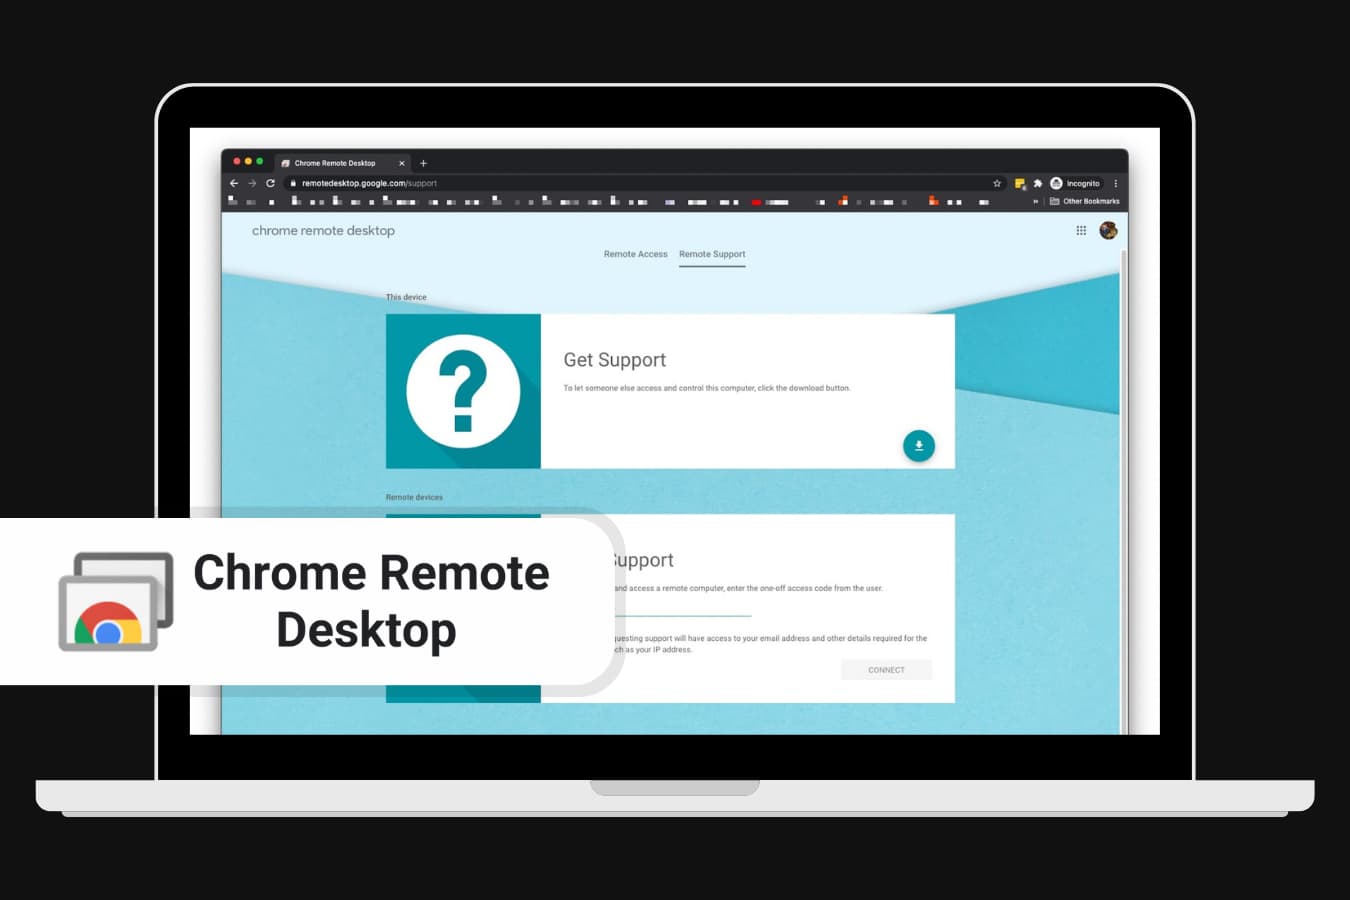 Chrome Remote Desktop software